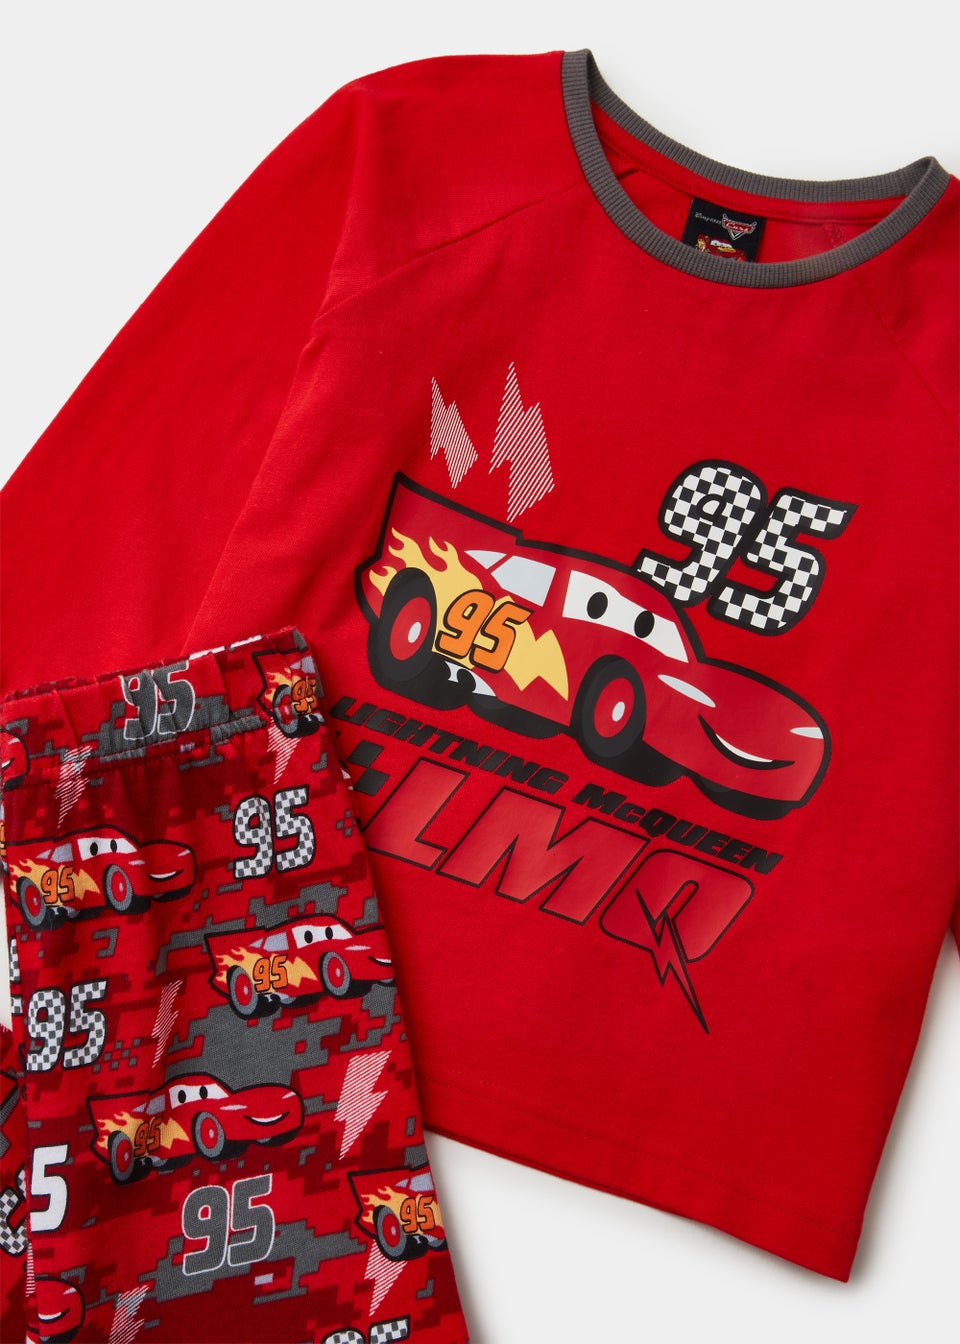 Kids Red Disney Cars Pyjama Set (12mths-6yrs)